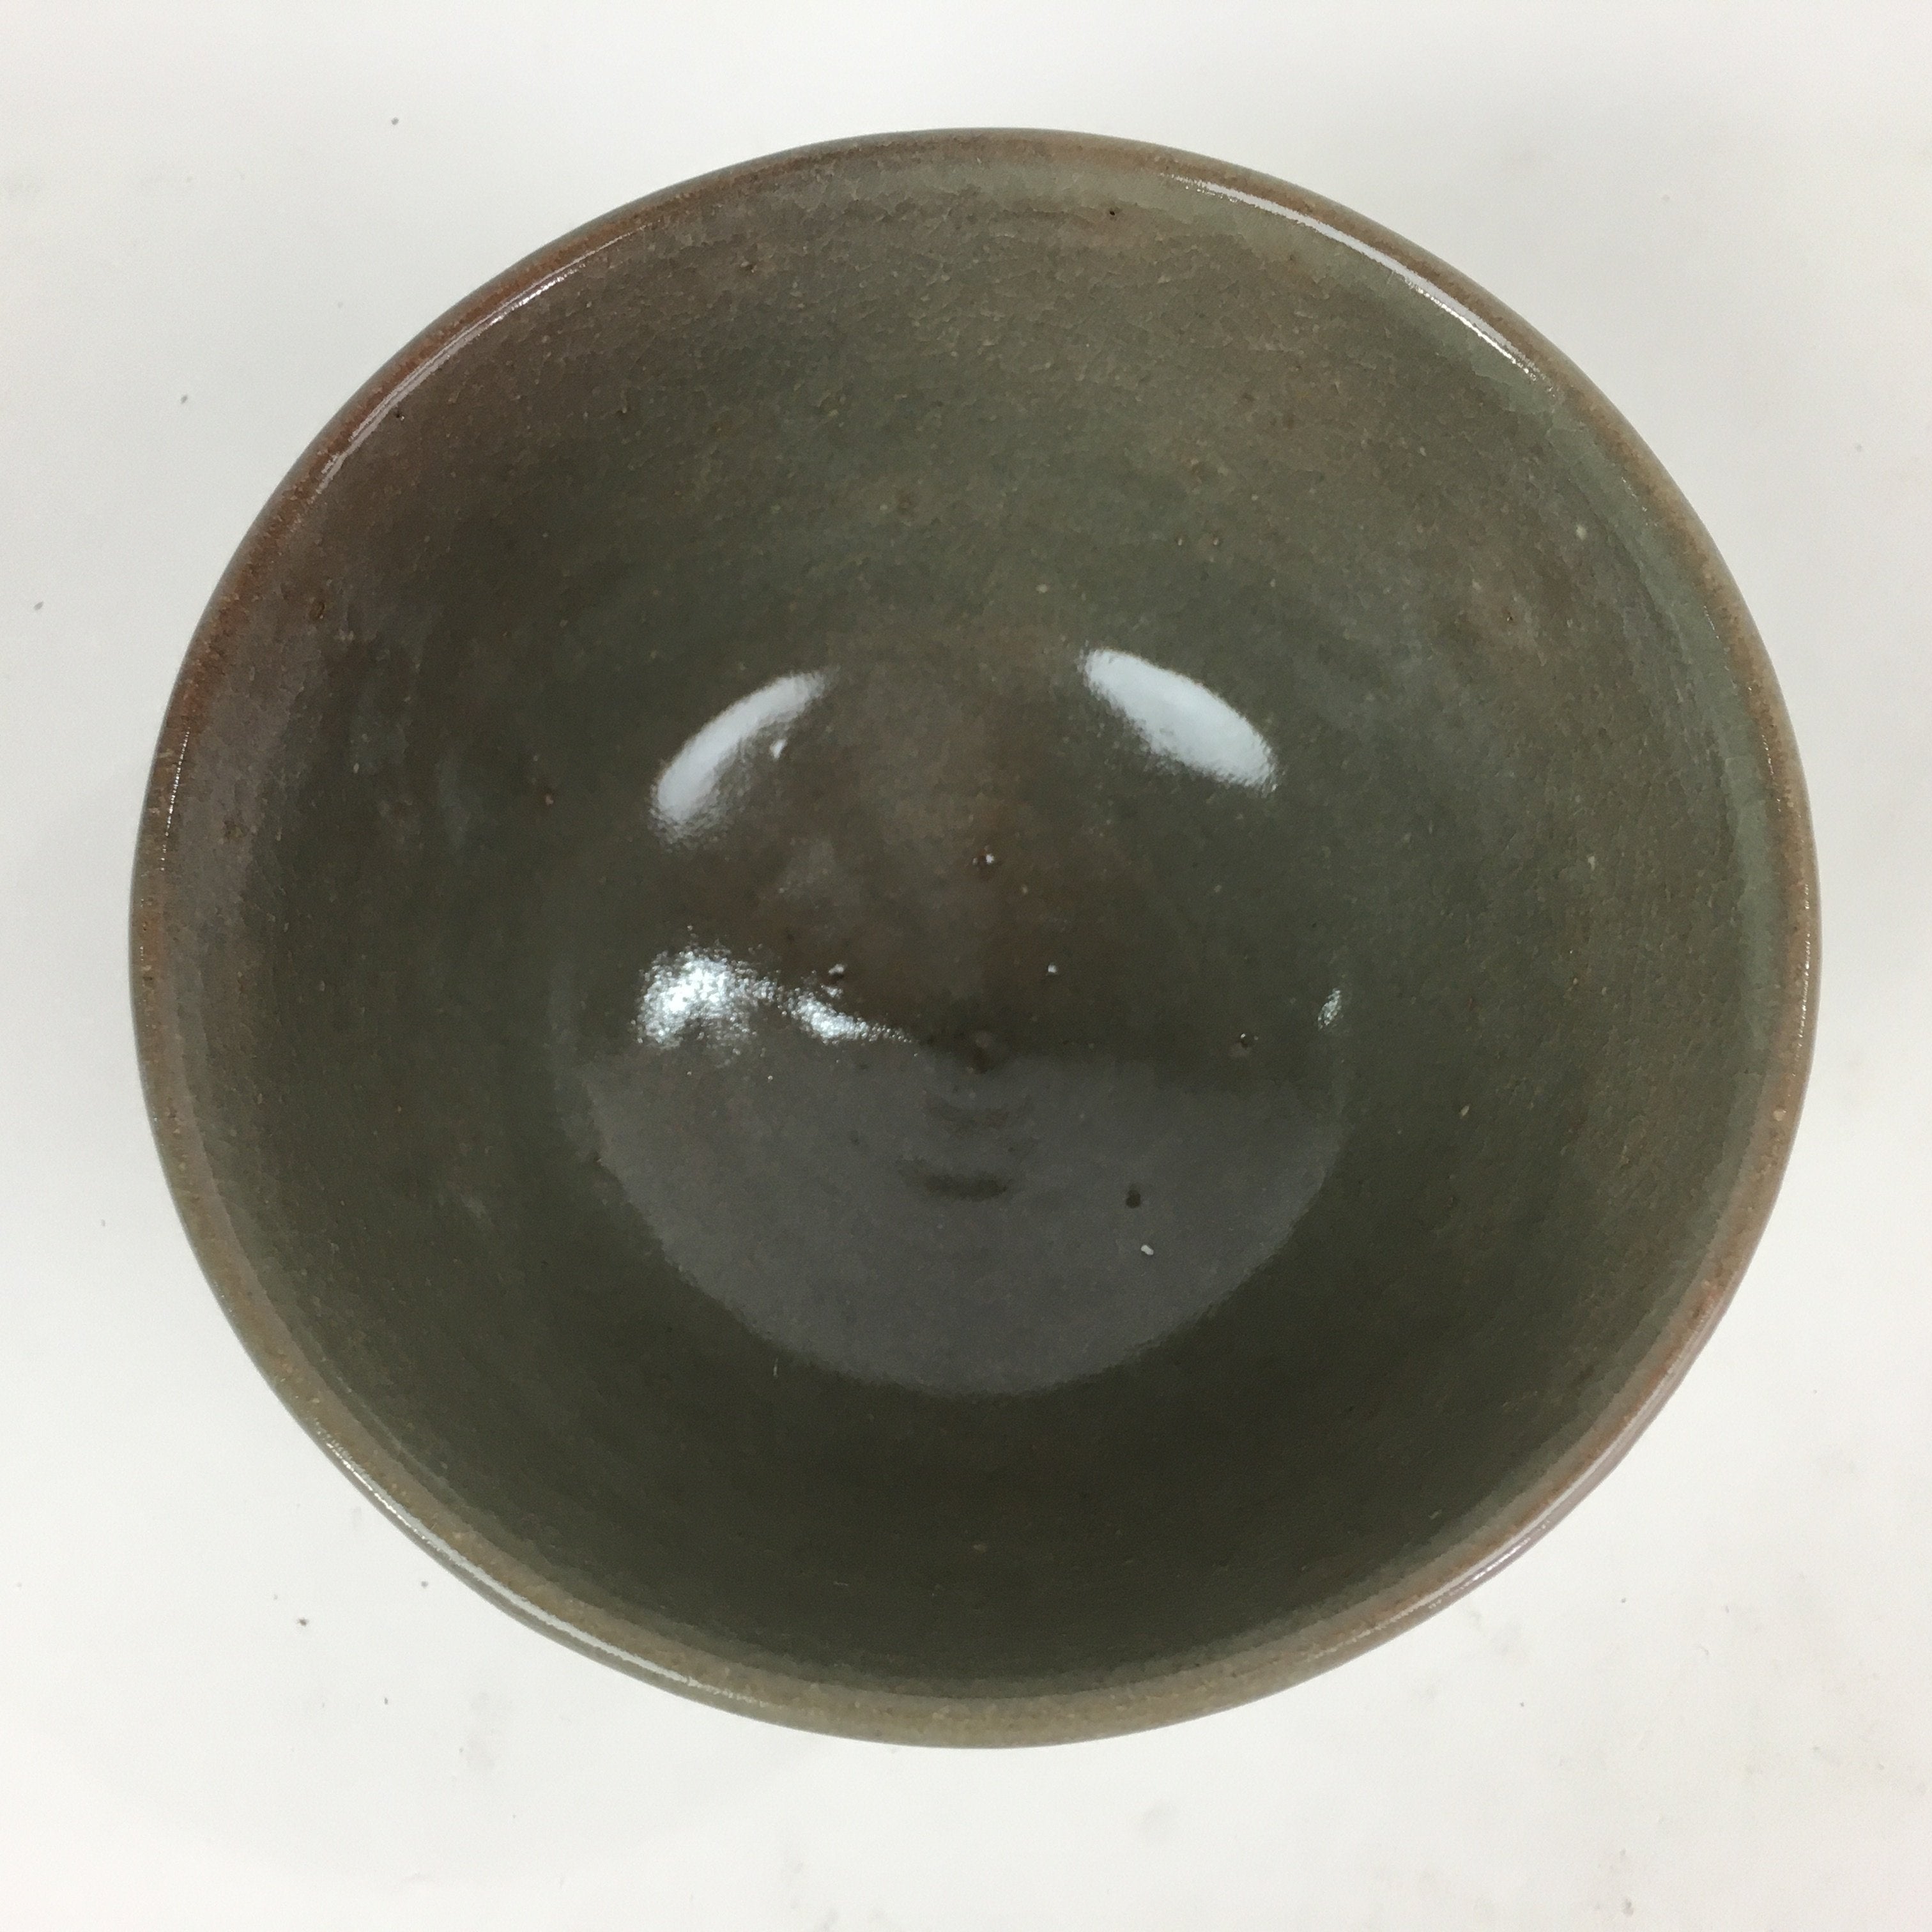 Japanese Ceramic Tea Ceremony Bowl Vtg Chawan Brown Pottery Sado GTB819